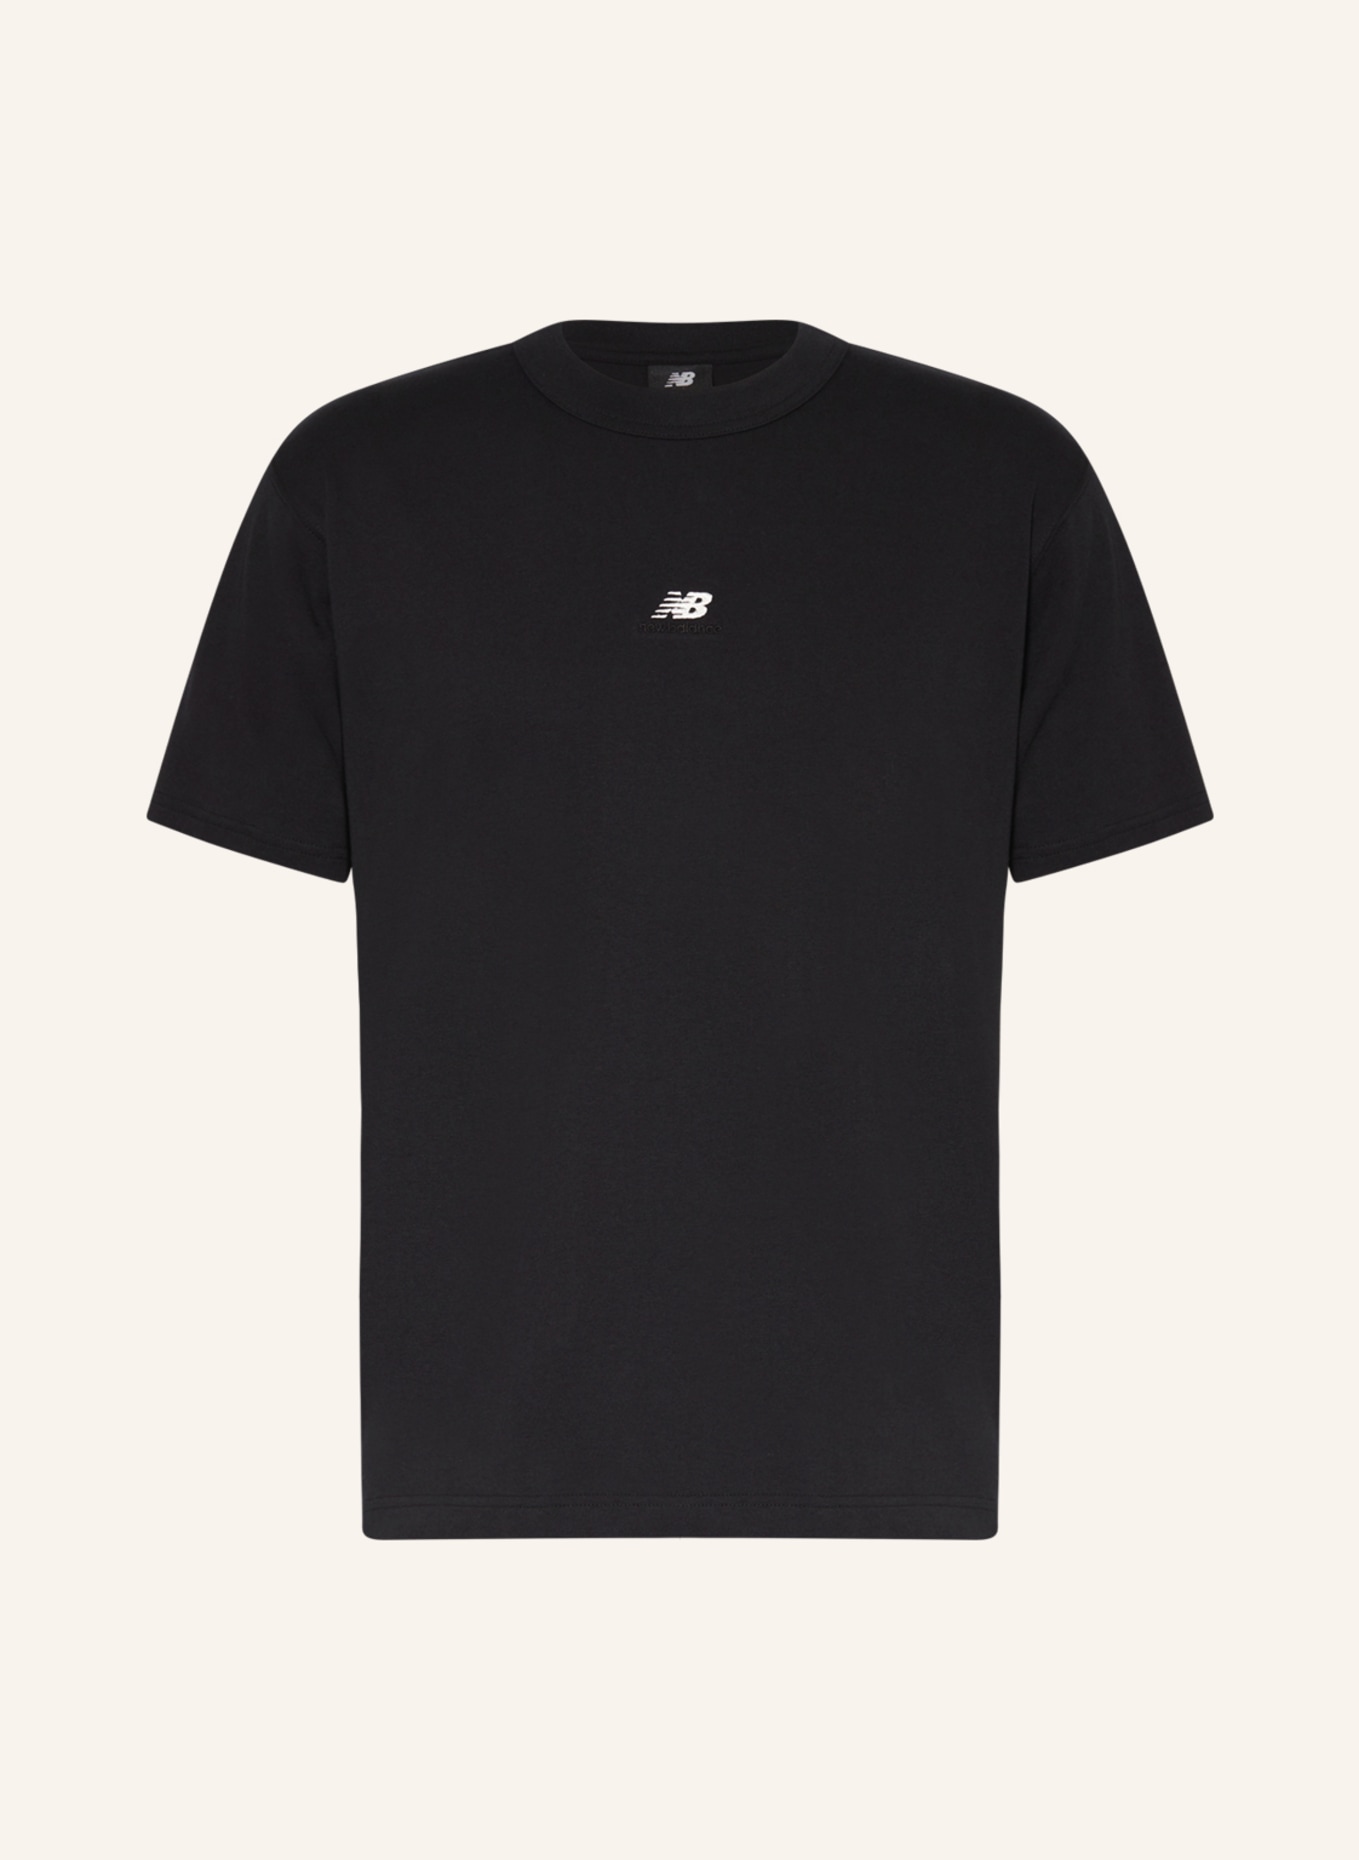 new balance GRAPHIC ATHLETICS REMASTERED black T-shirt in